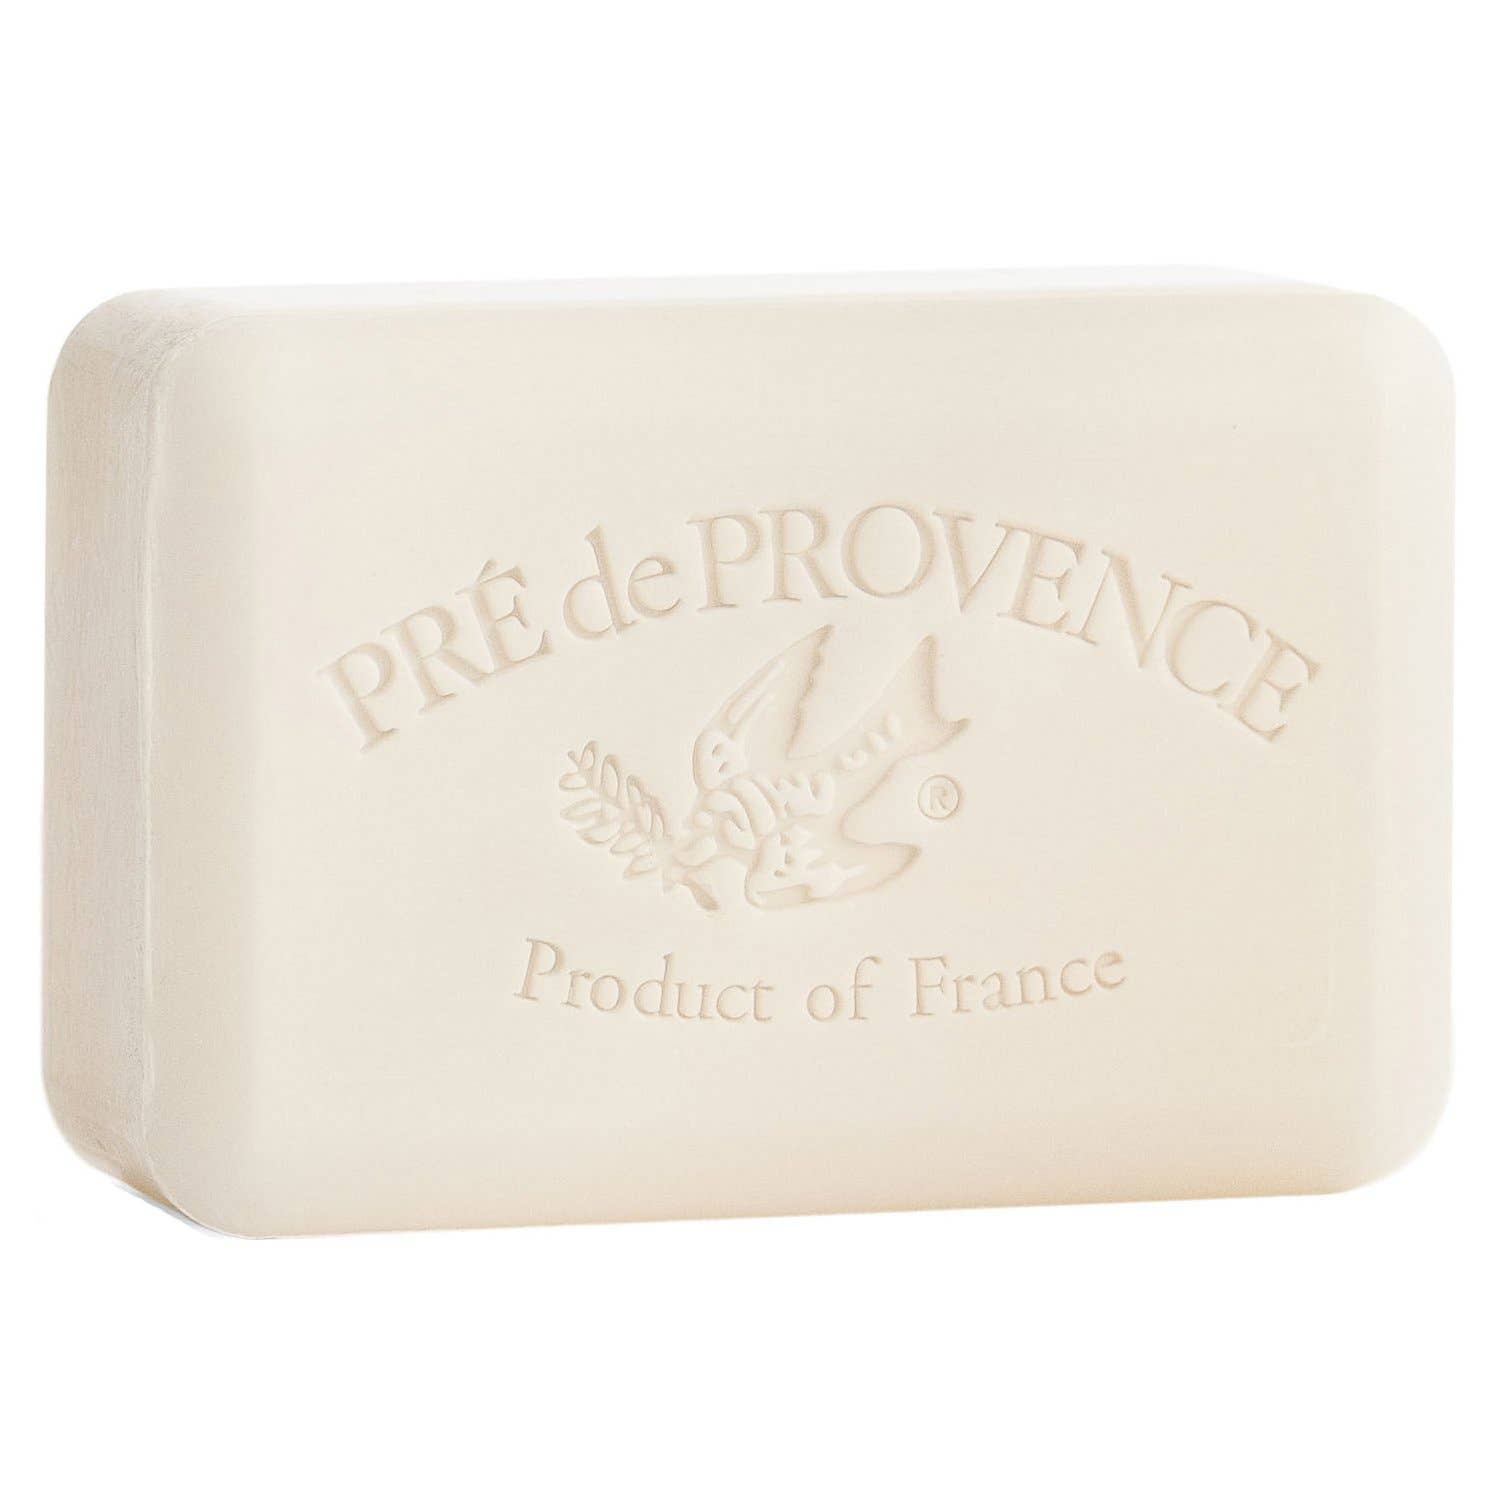 Milk Soap Bar - 25 g